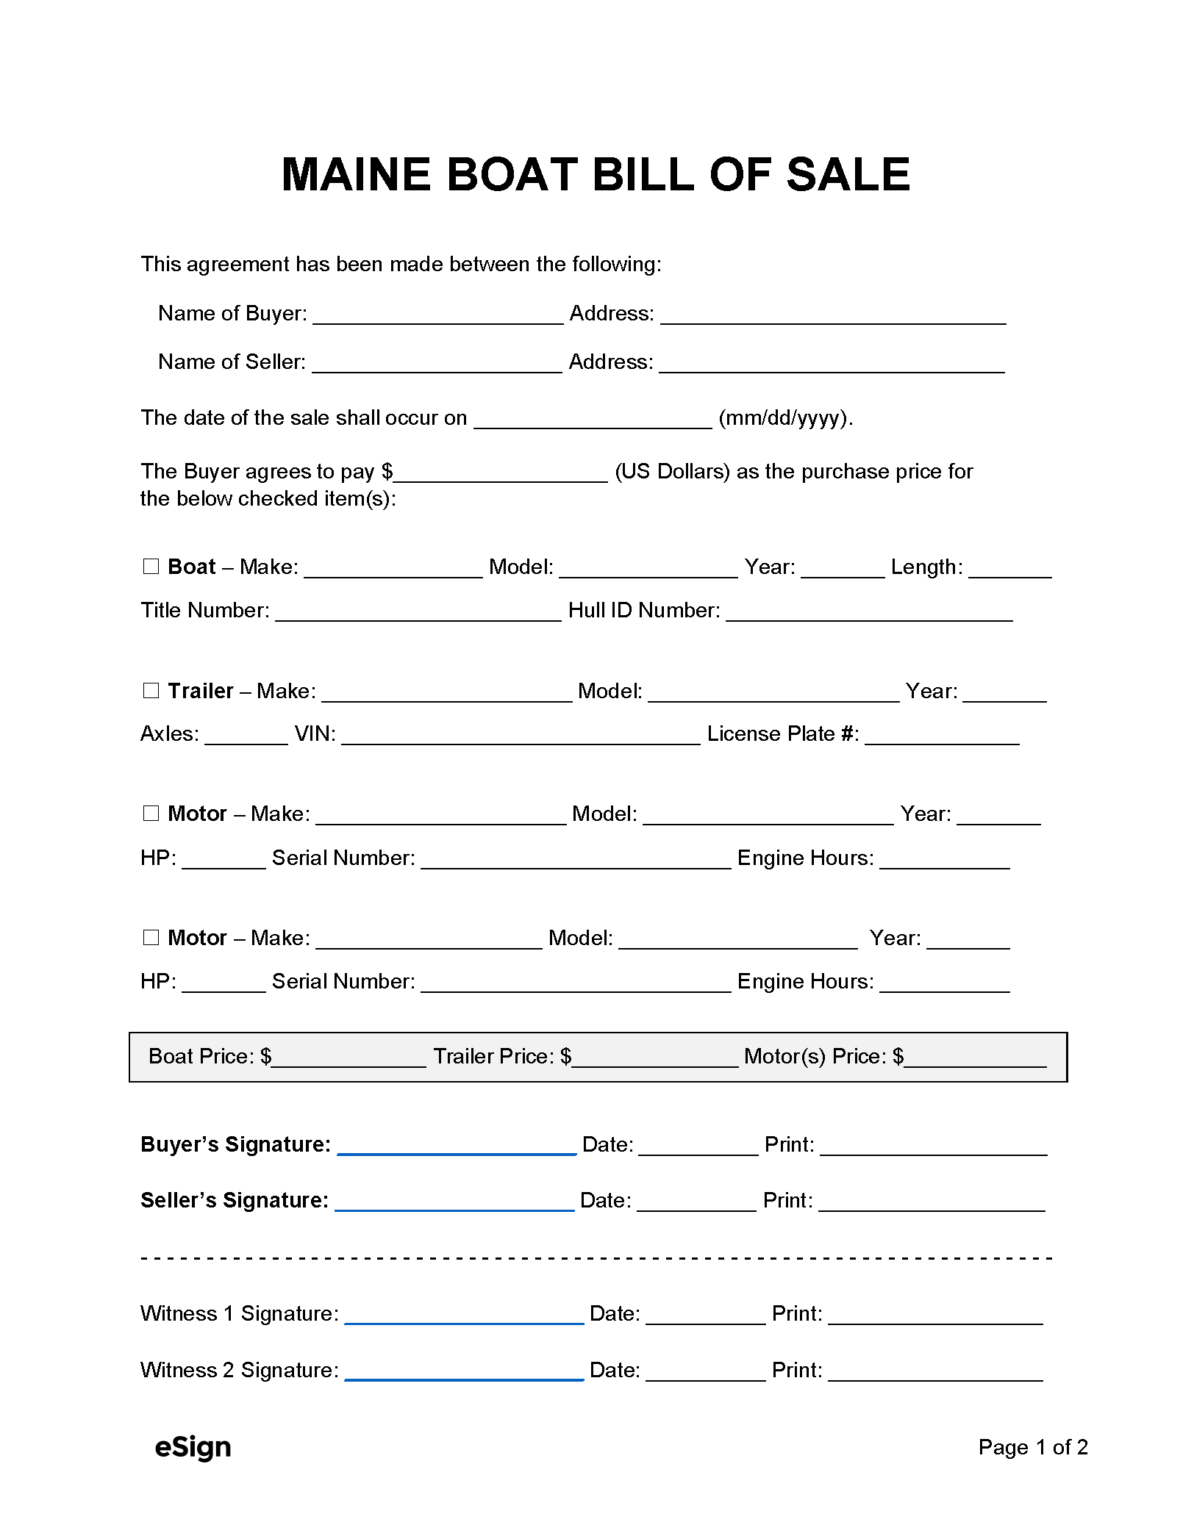 free-maine-boat-bill-of-sale-form-pdf-word